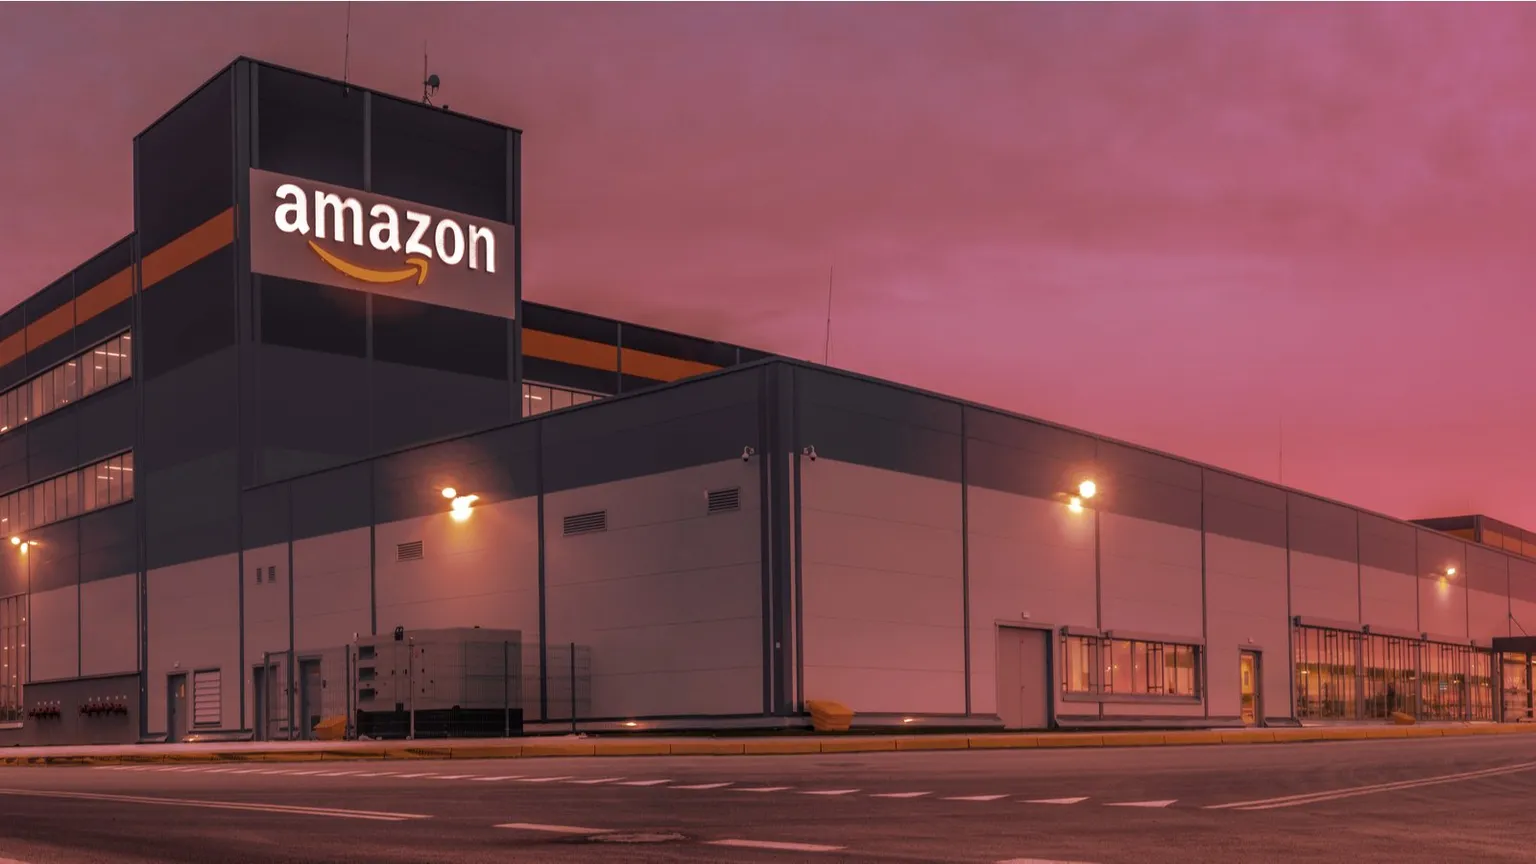 An Amazon warehouse in Poland. Image: Shutterstock